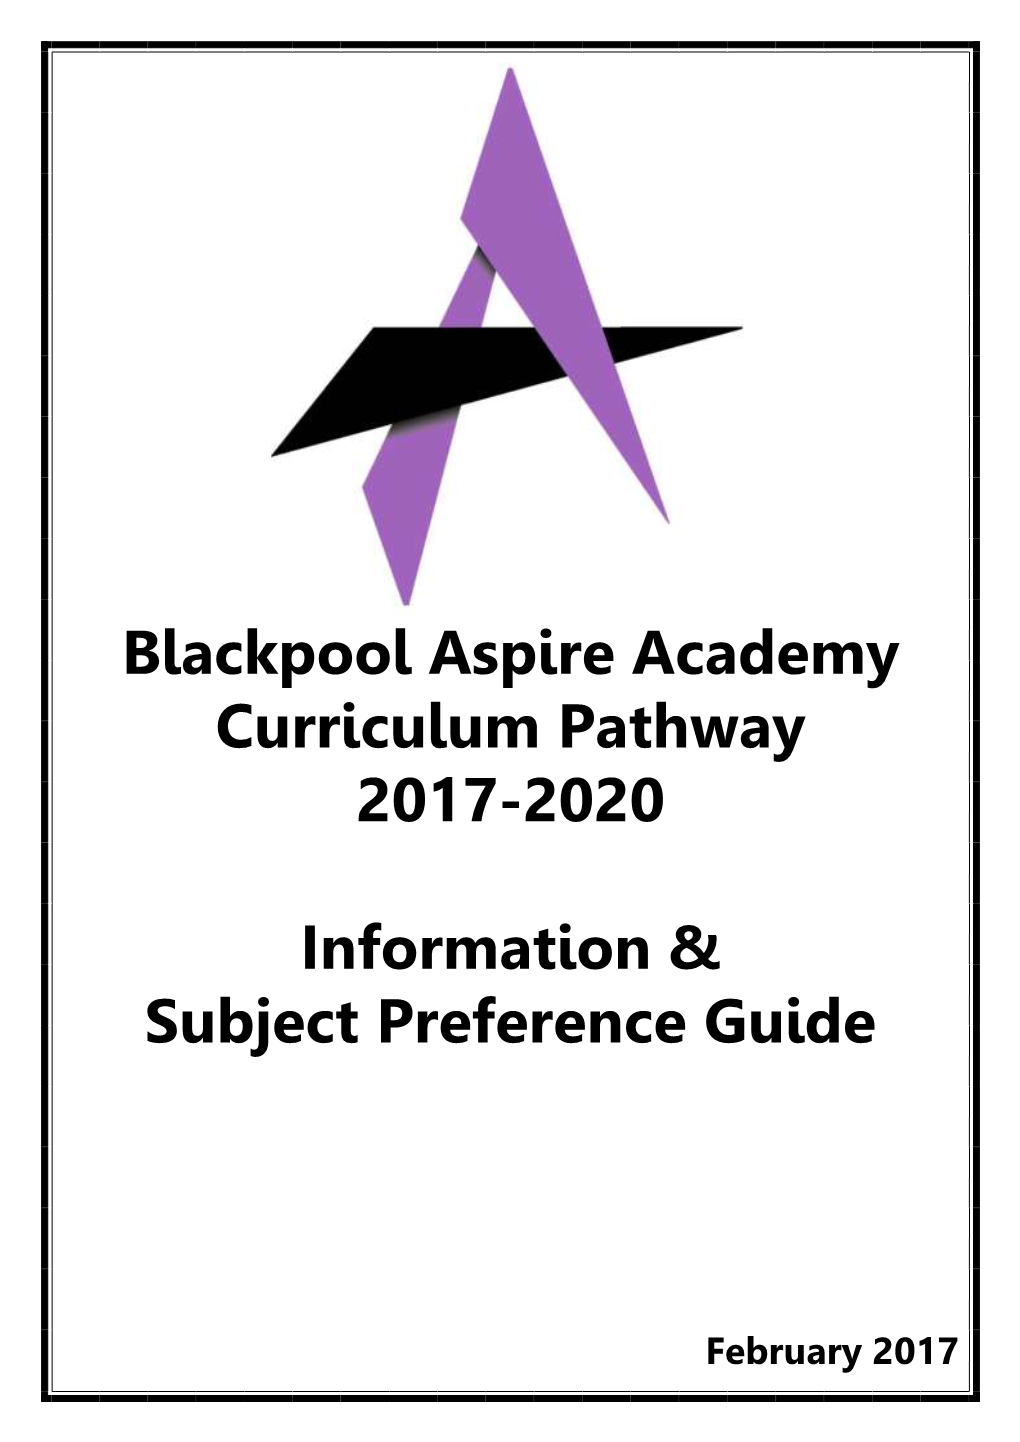 Blackpool Aspire Academy Curriculum Pathway 2017-2020 Information